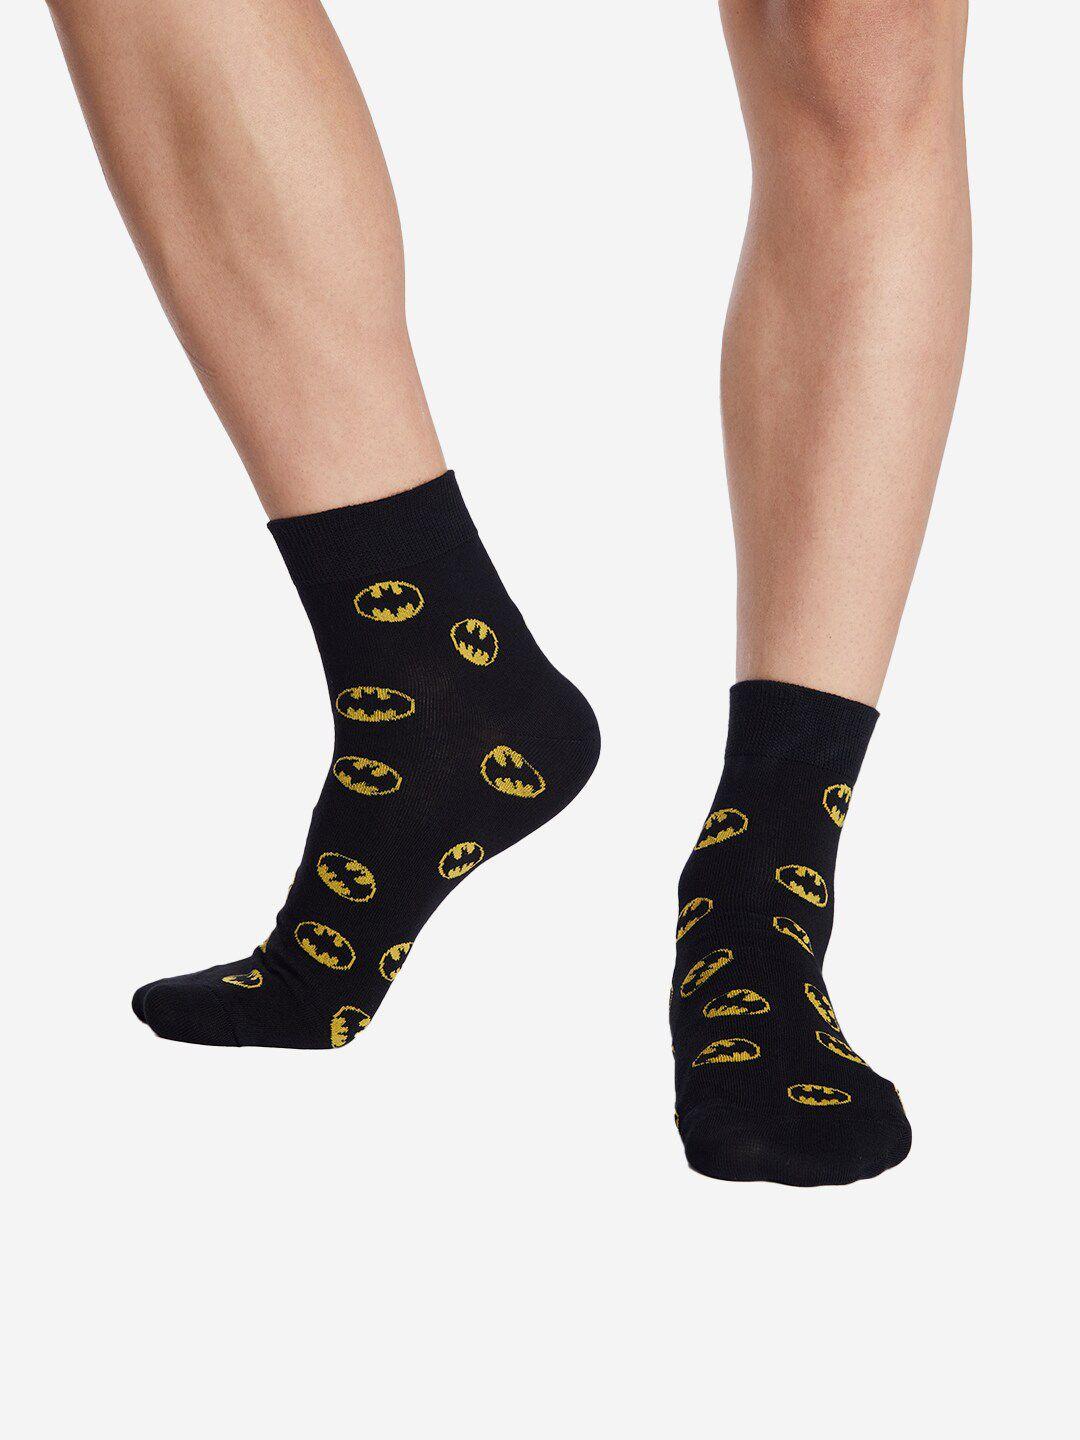 the souled store batman logo patterned cotton ankle-length socks